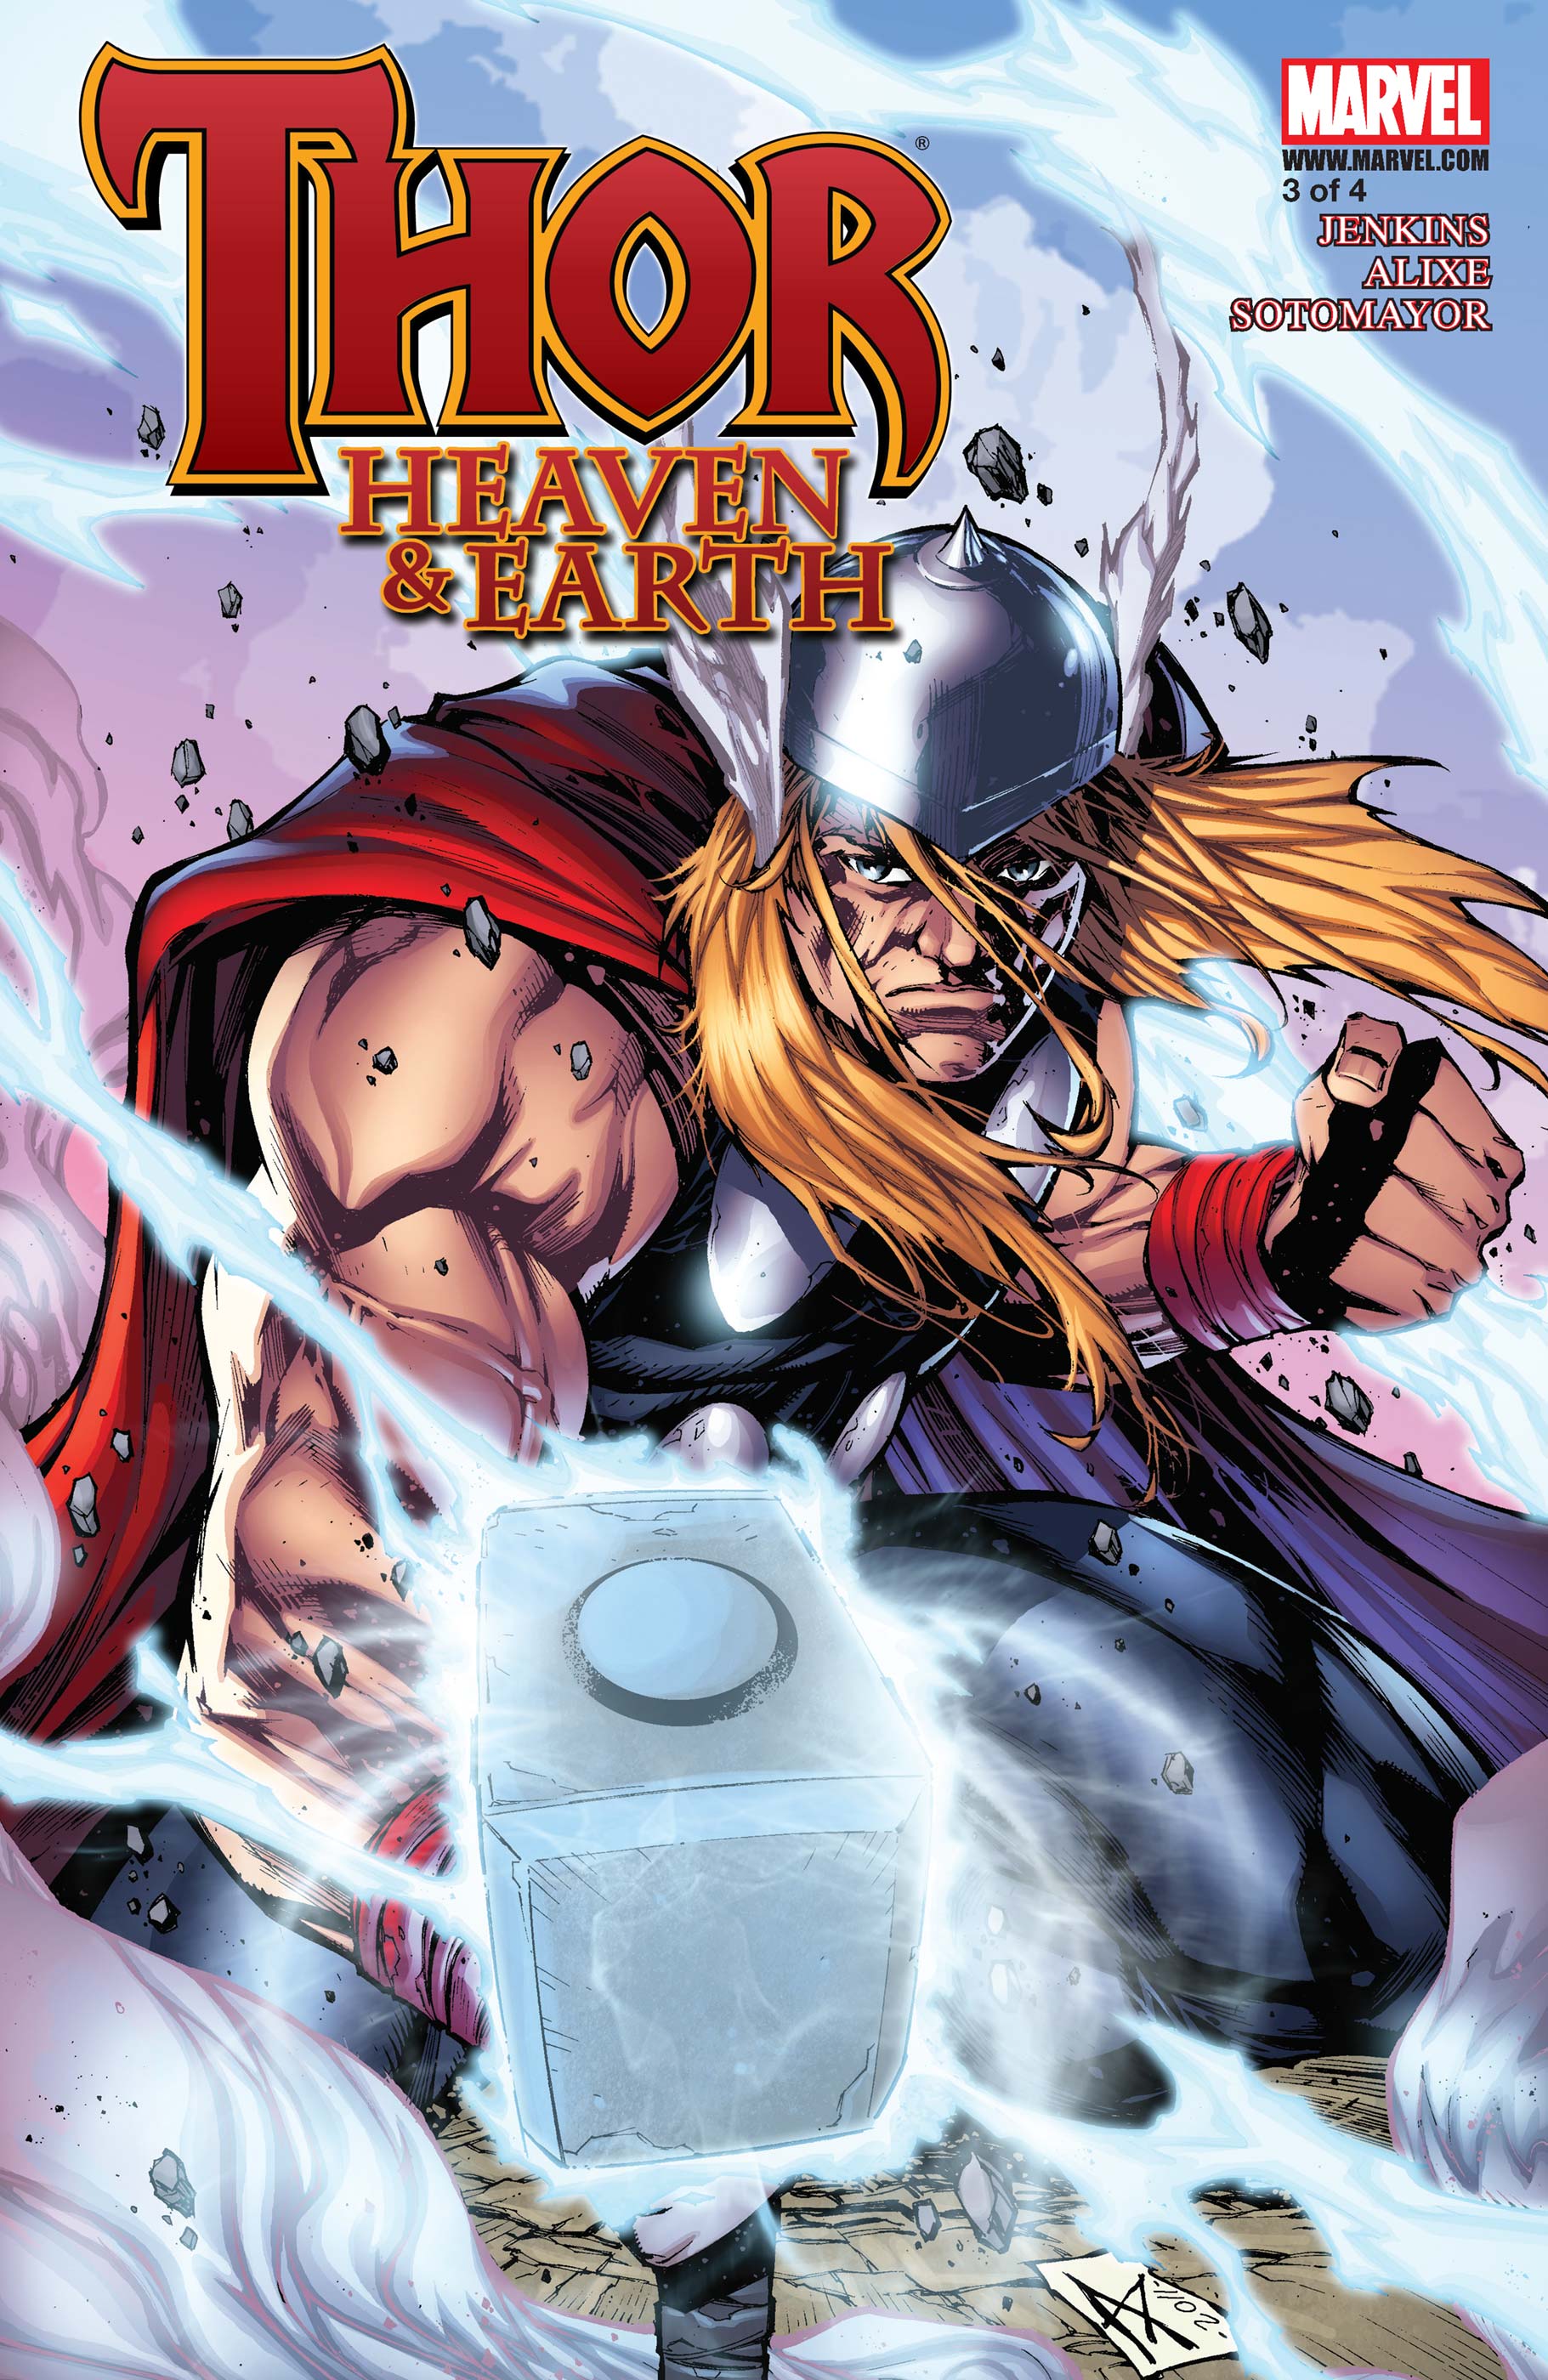 Thor heaven and earth